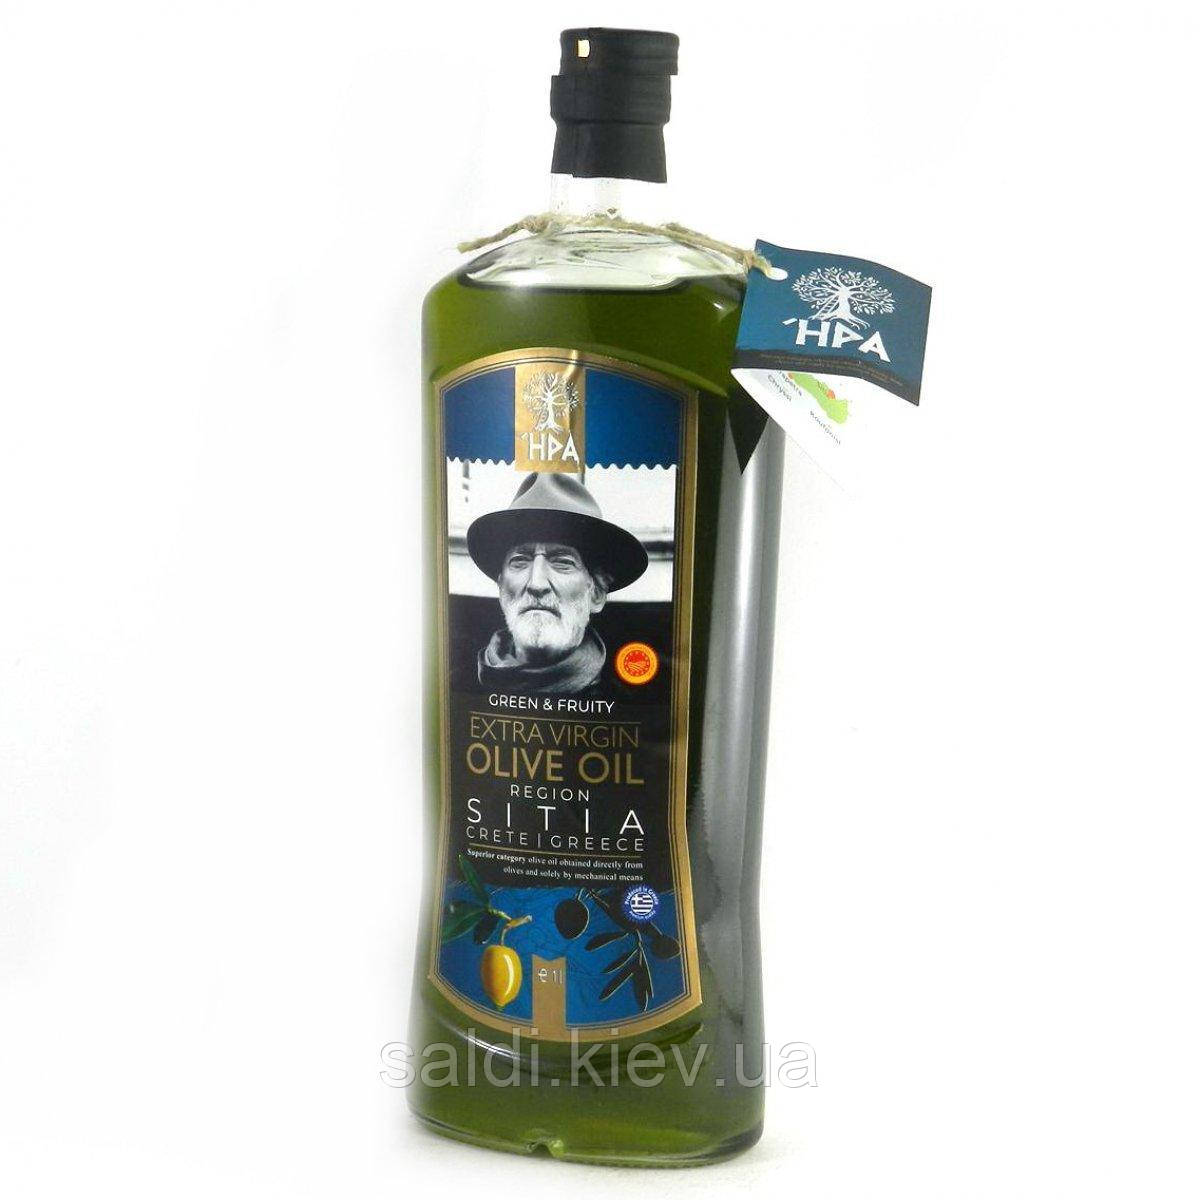 Оливкова олія холодного віджиму HPA Green & Fruity extra virgin olive oil Region Sitia